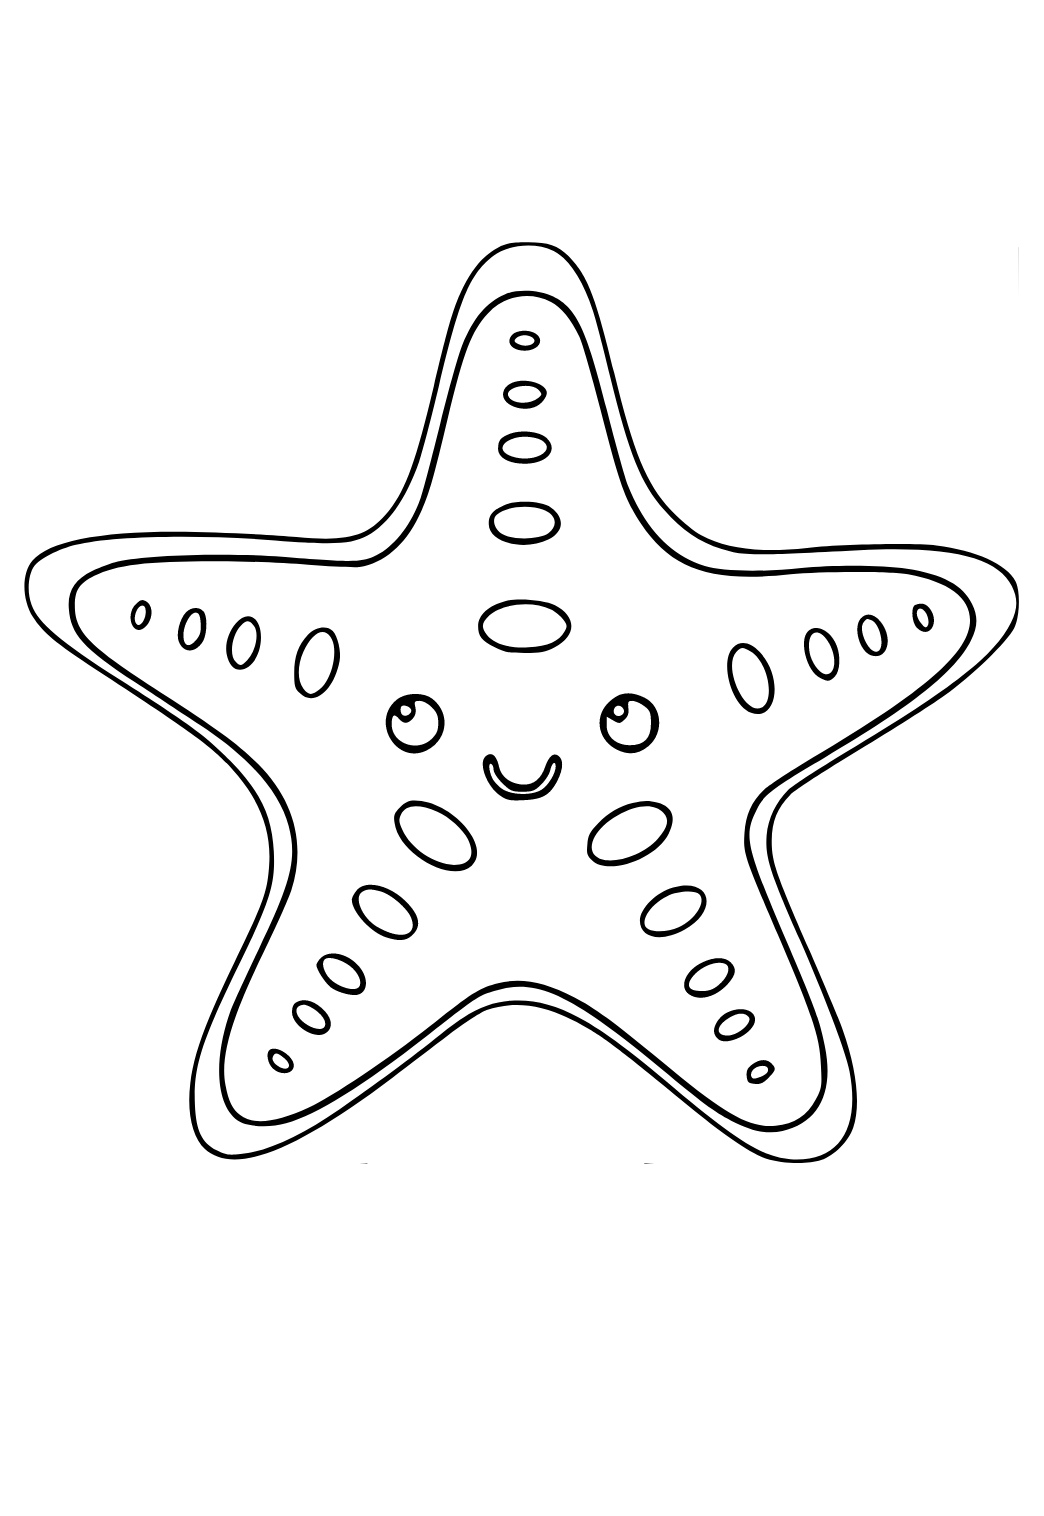 Bintang Laut